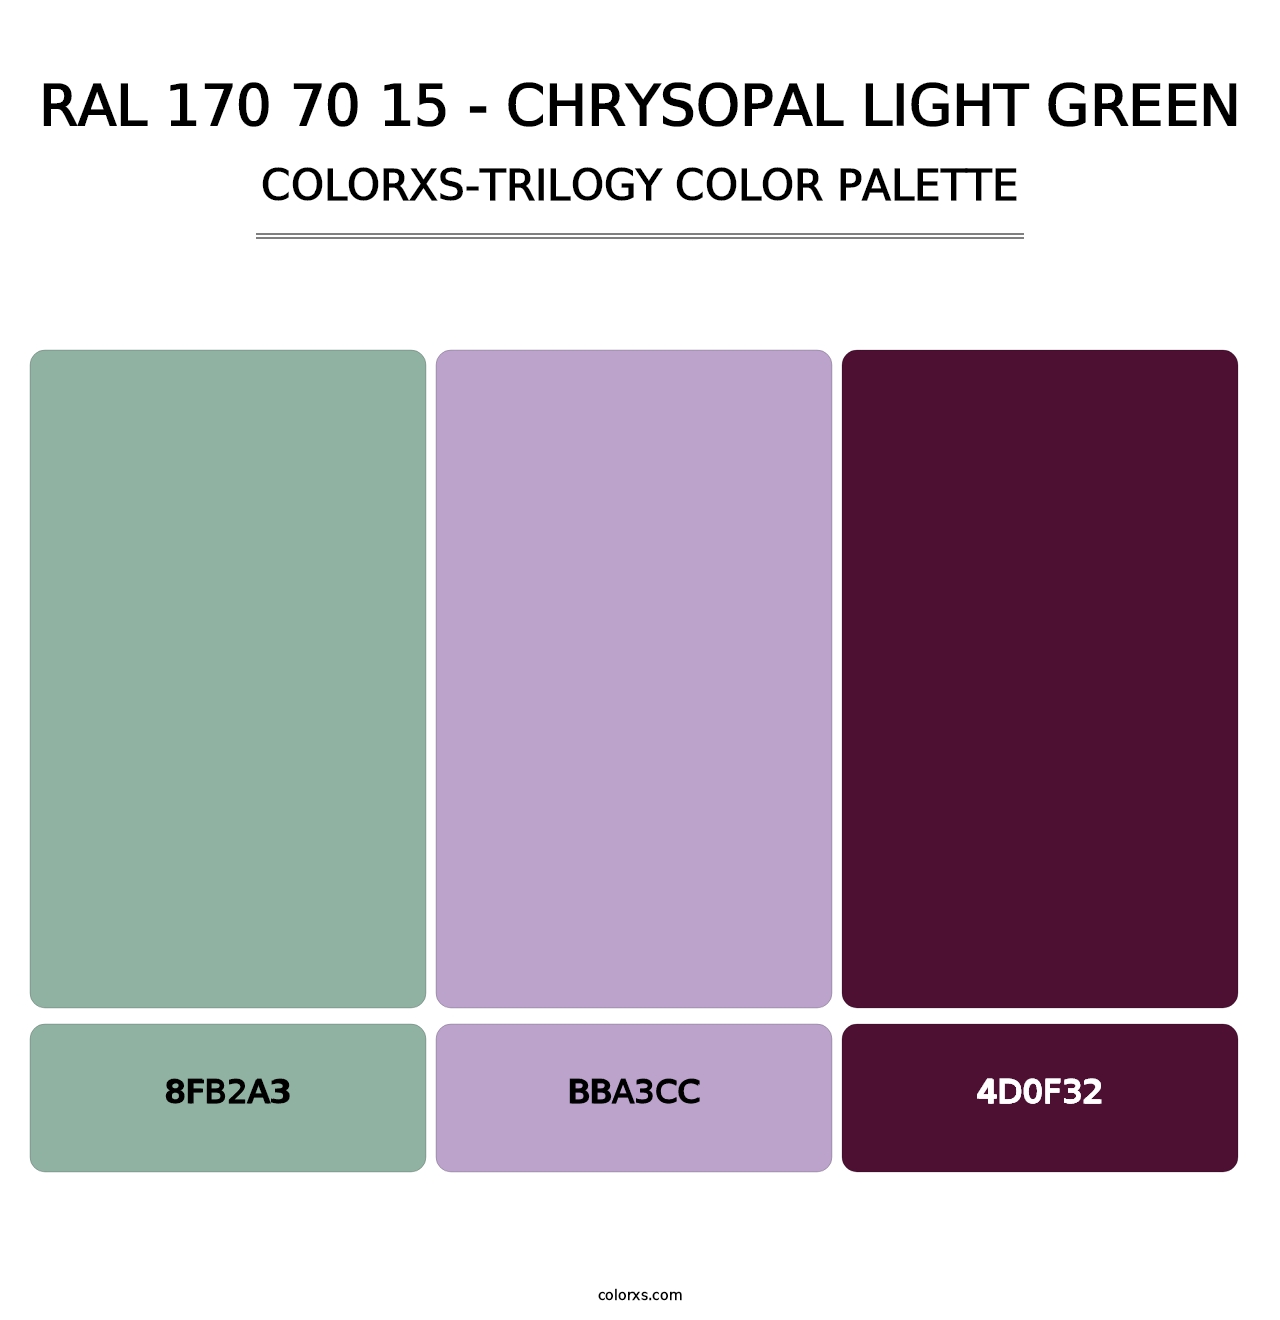 RAL 170 70 15 - Chrysopal Light Green - Colorxs Trilogy Palette